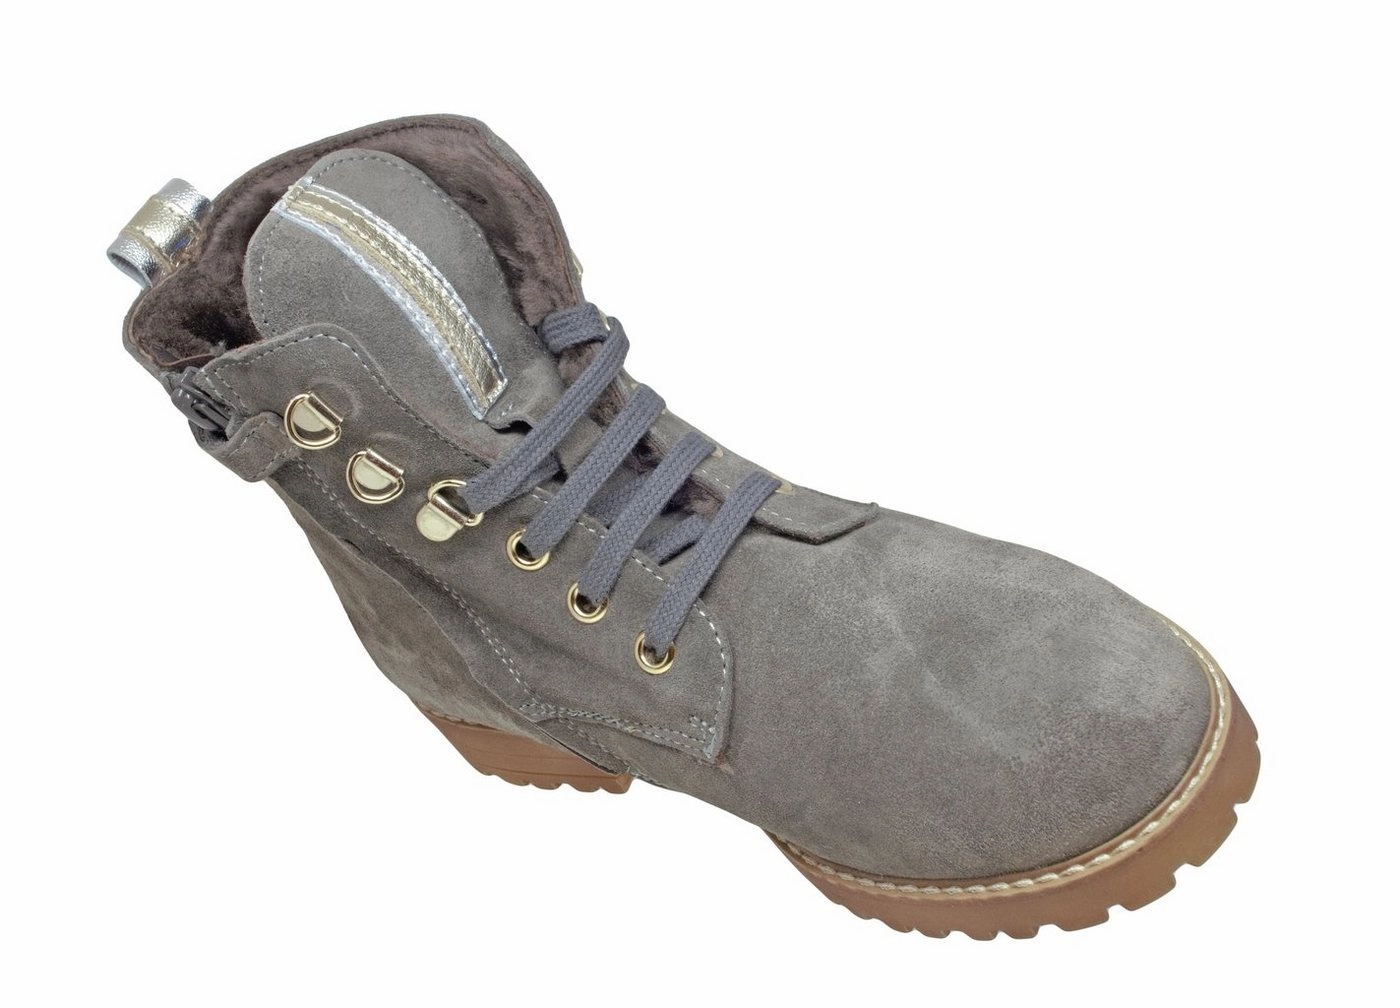 Clic »Clic 9836 Stiefeletten Boots Leder Lammfell« Schnürstiefelette